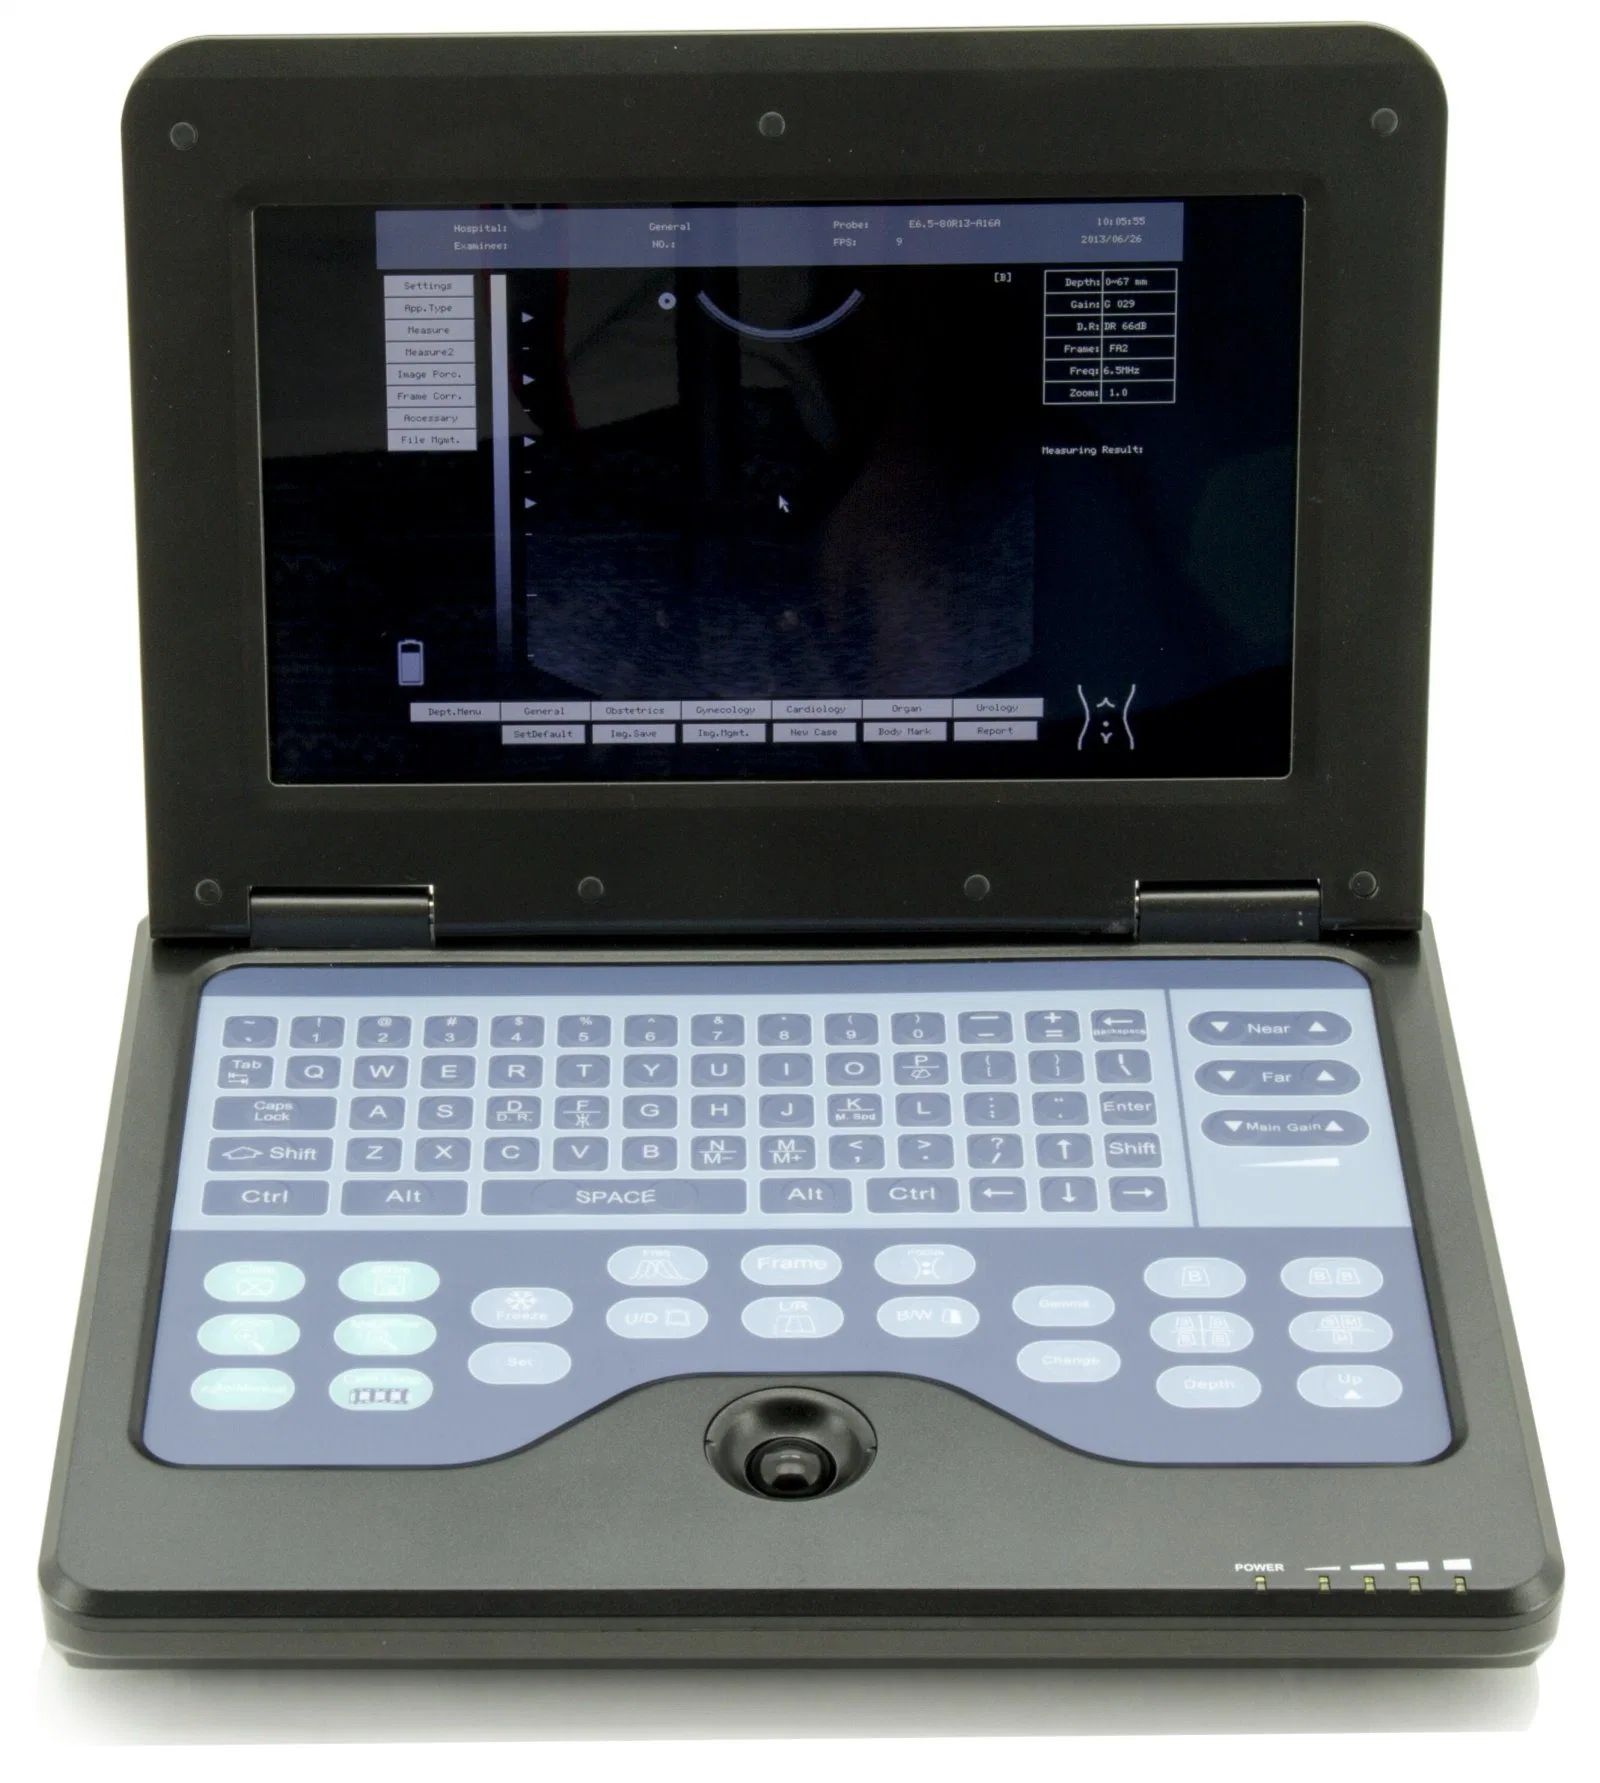 Cms600p2 Hopital Medical Equipment Notebook Diagnostic Ultrasound System Medical Equipment